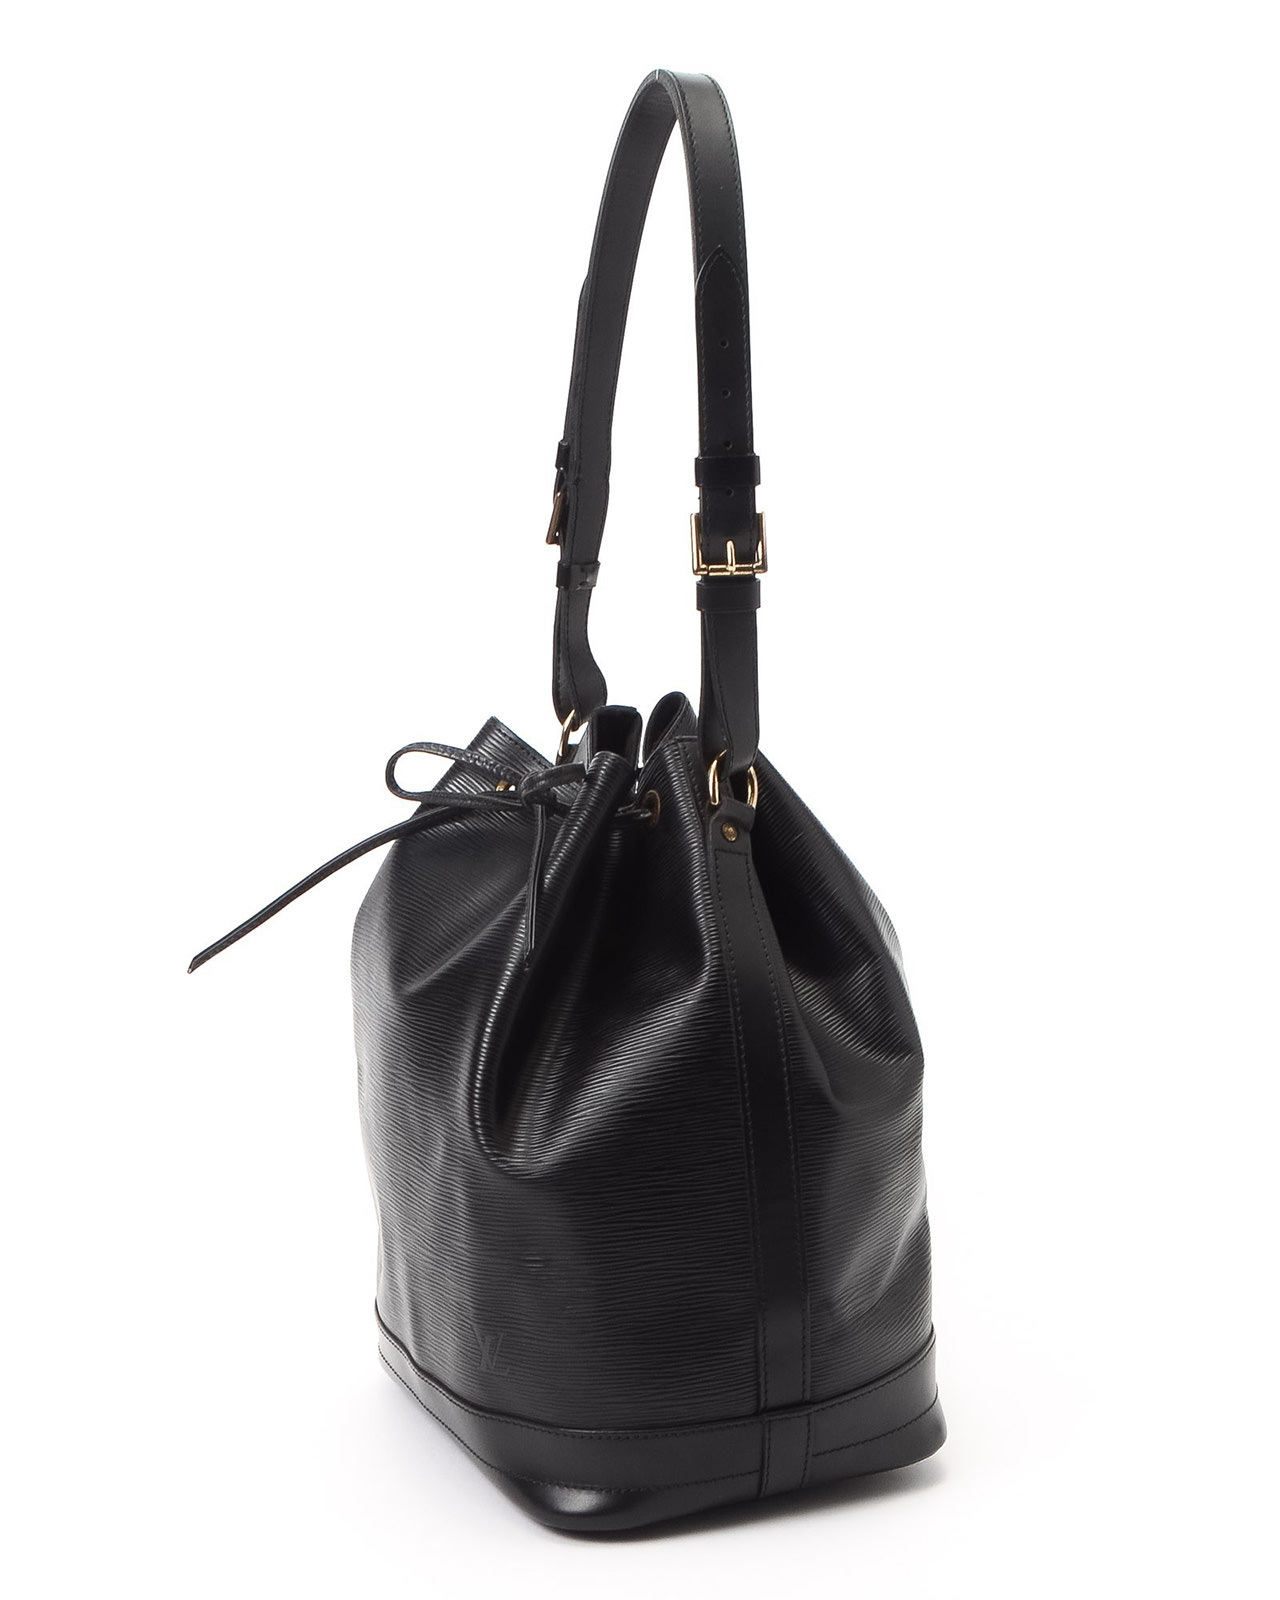 Lyst - Louis Vuitton Noe Shoulder Bag in Black